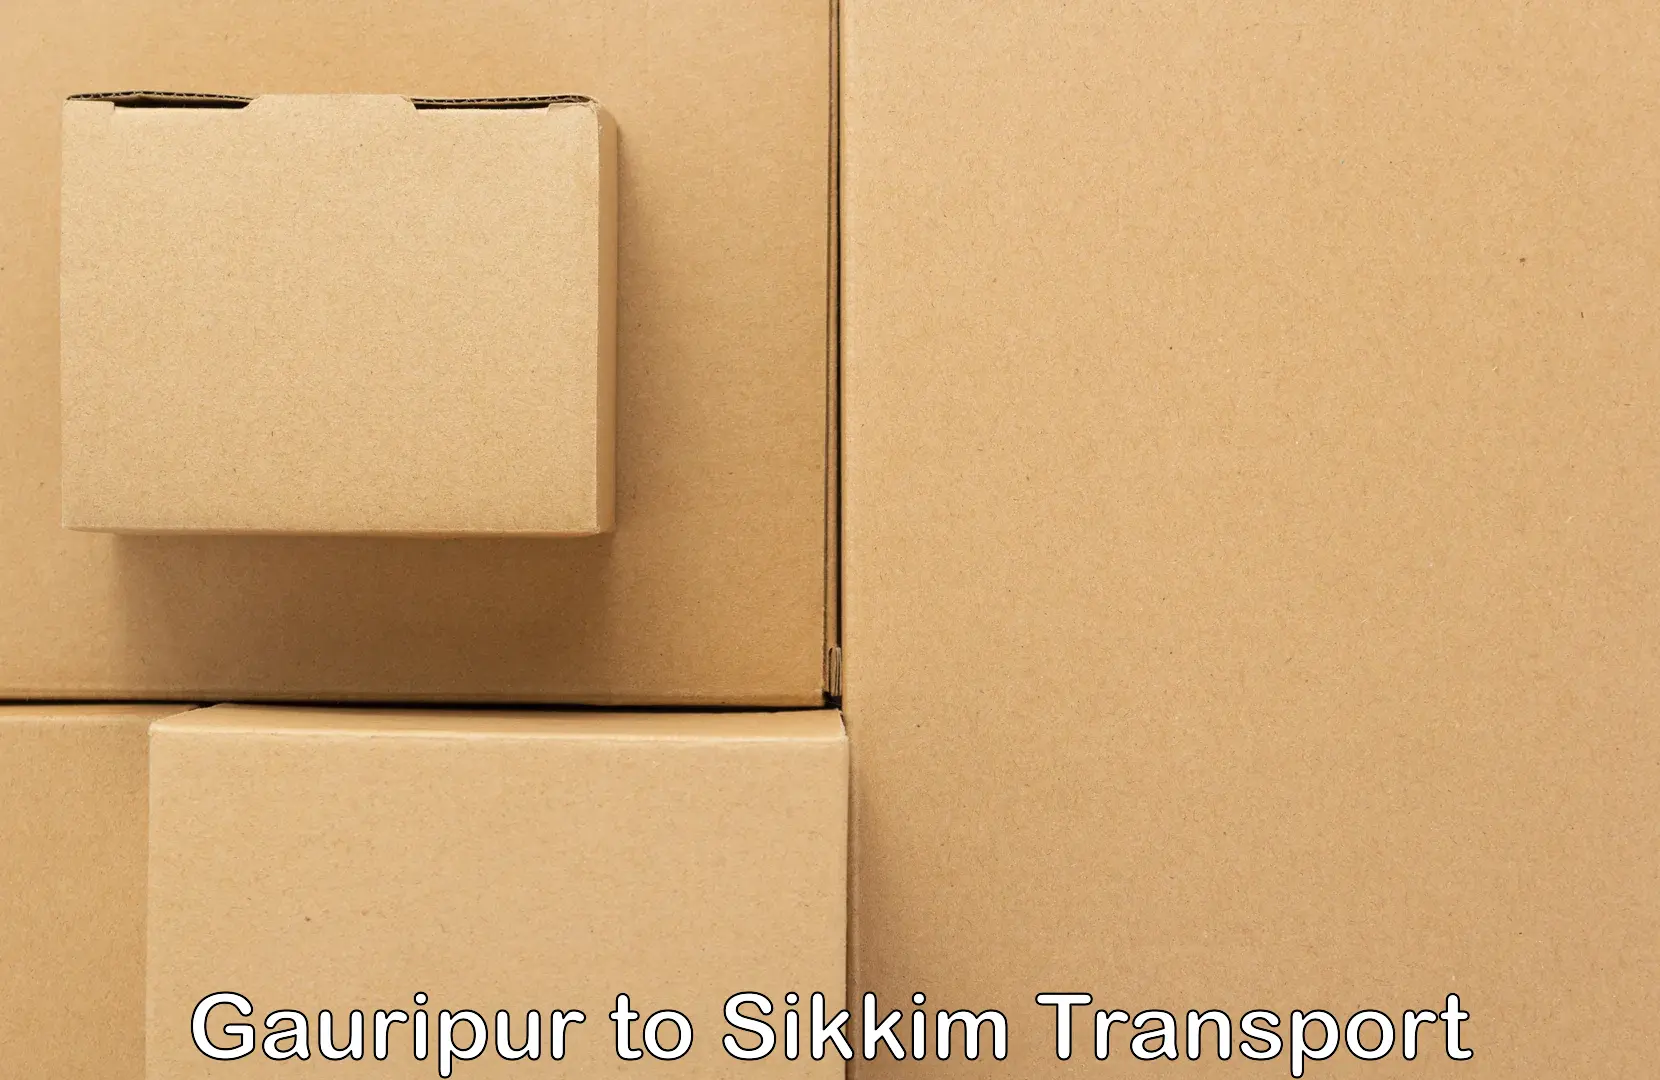 Online transport service Gauripur to Sikkim